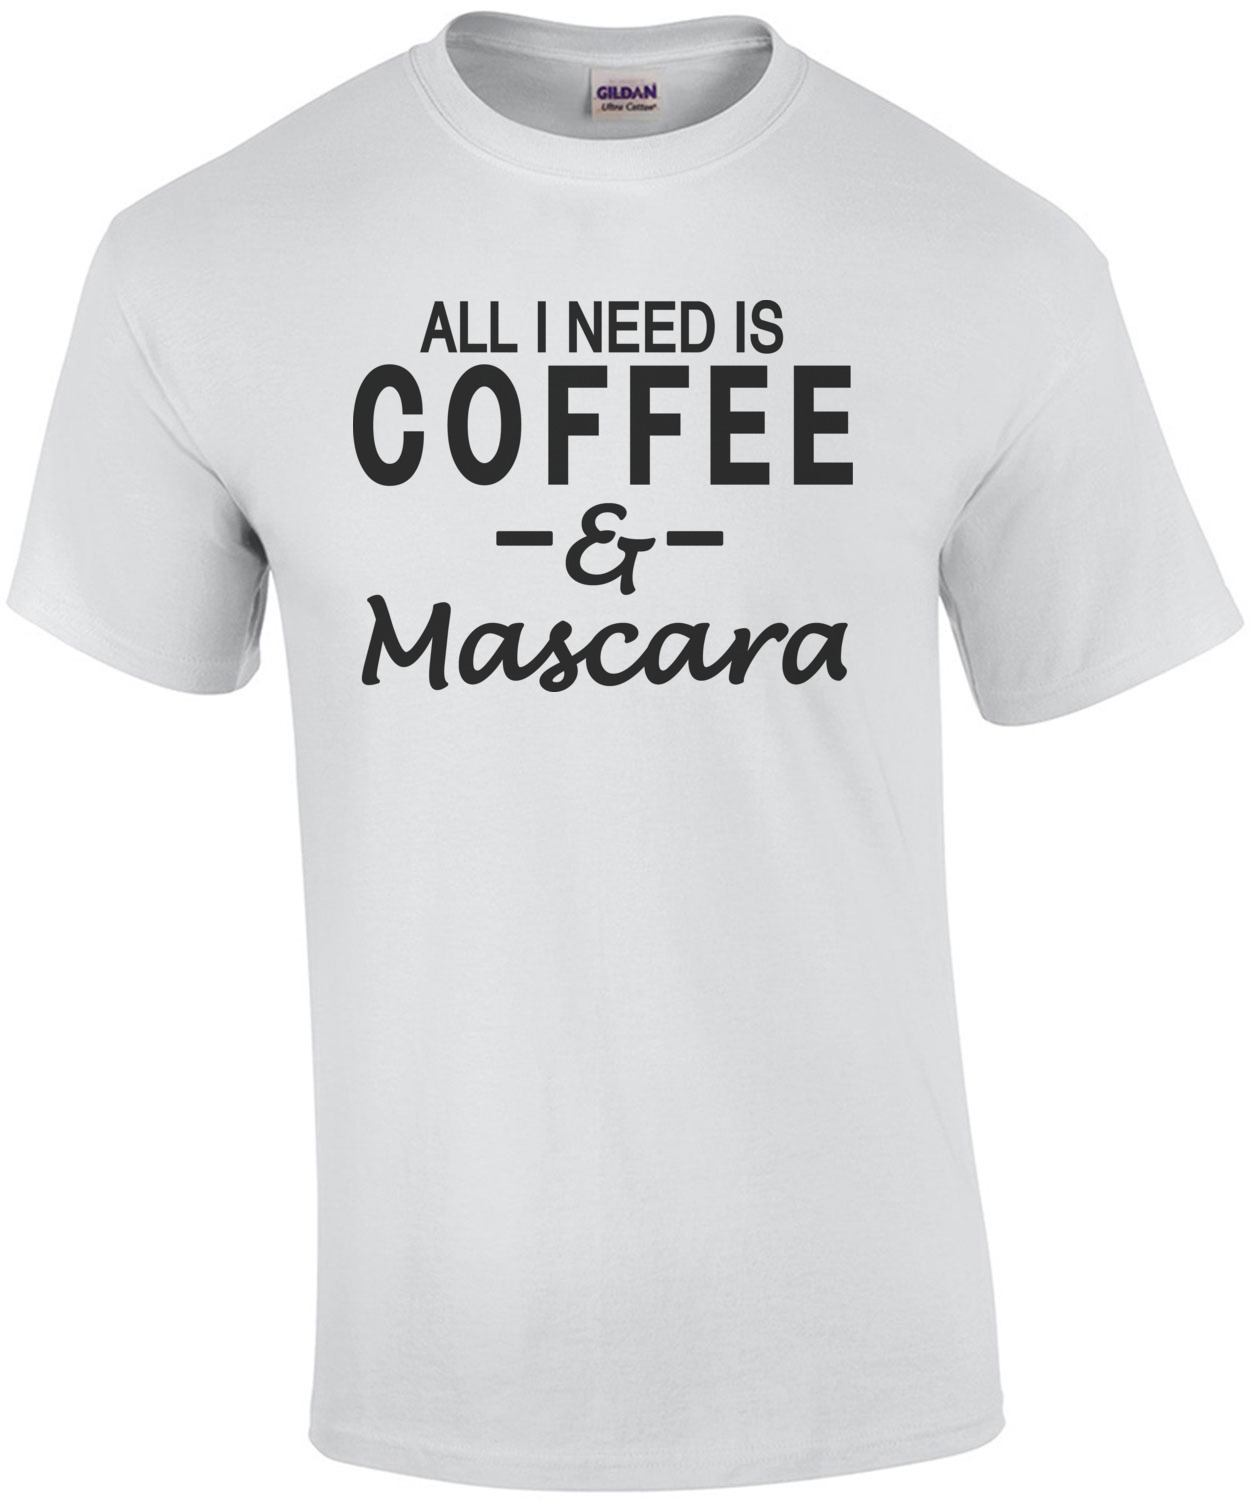 All I need is coffee & Mascara T-Shirt shirt